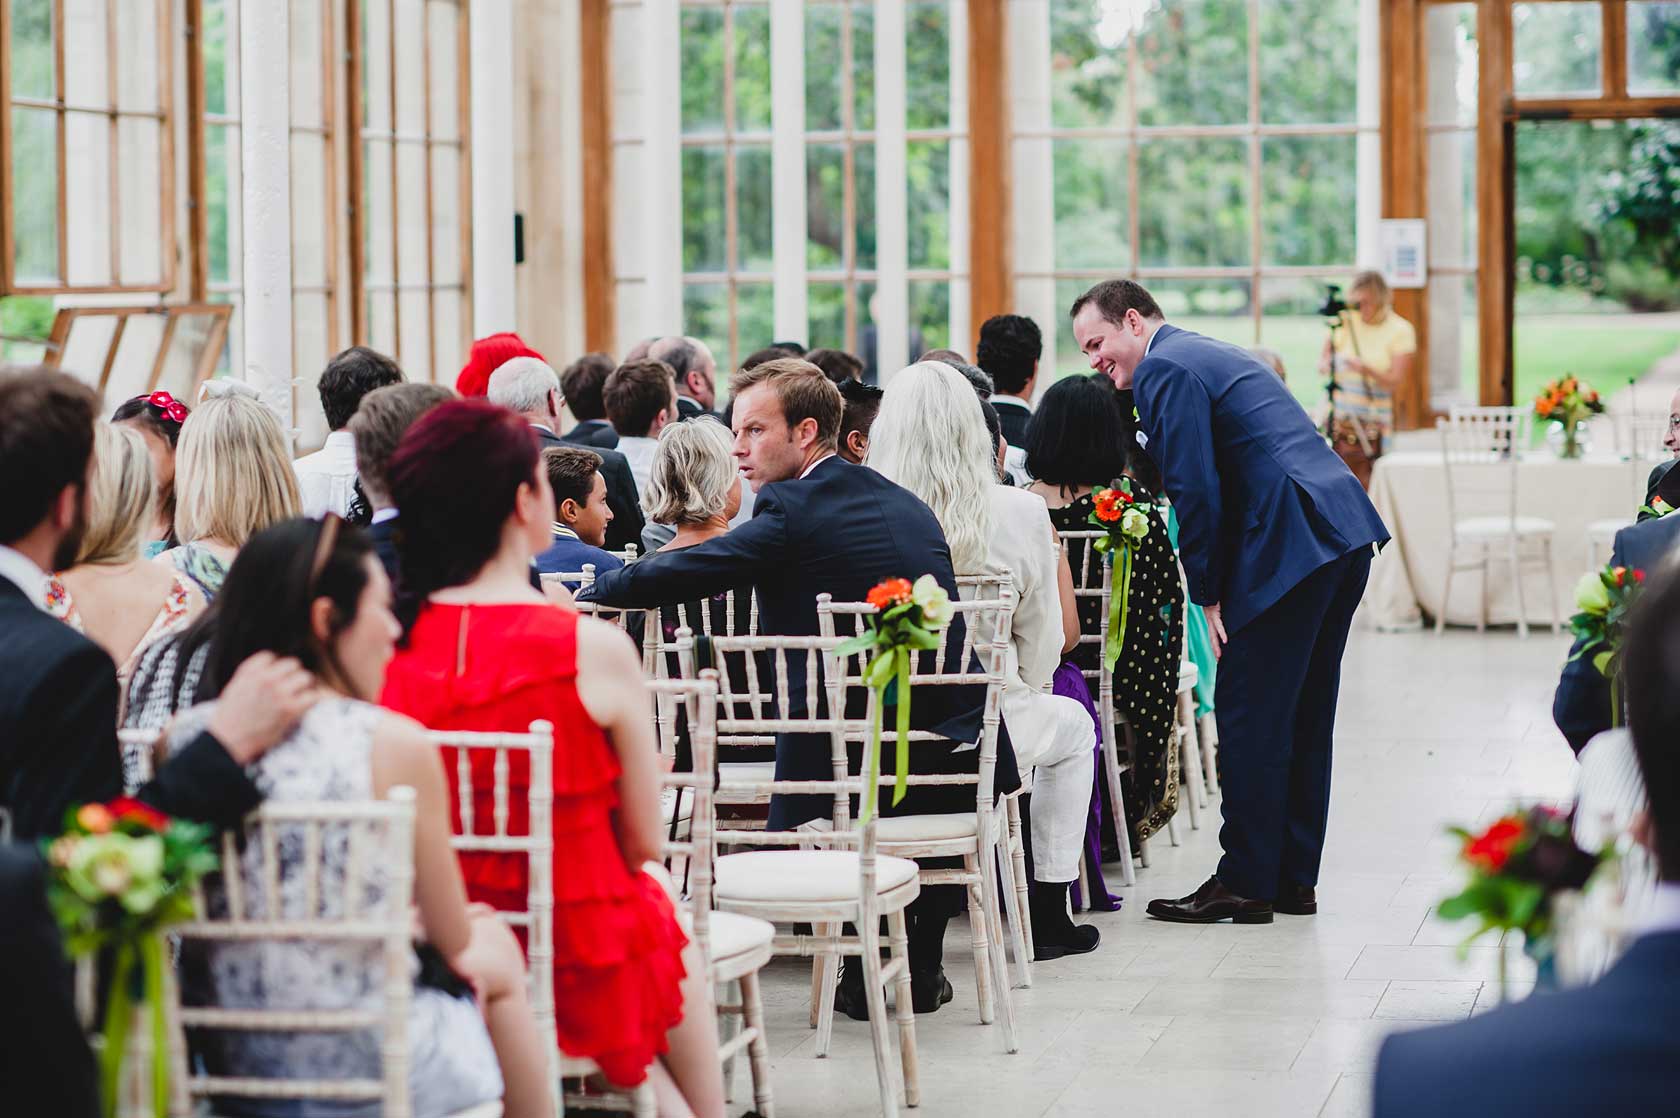 Reportage Wedding Photography at Kew Gardens